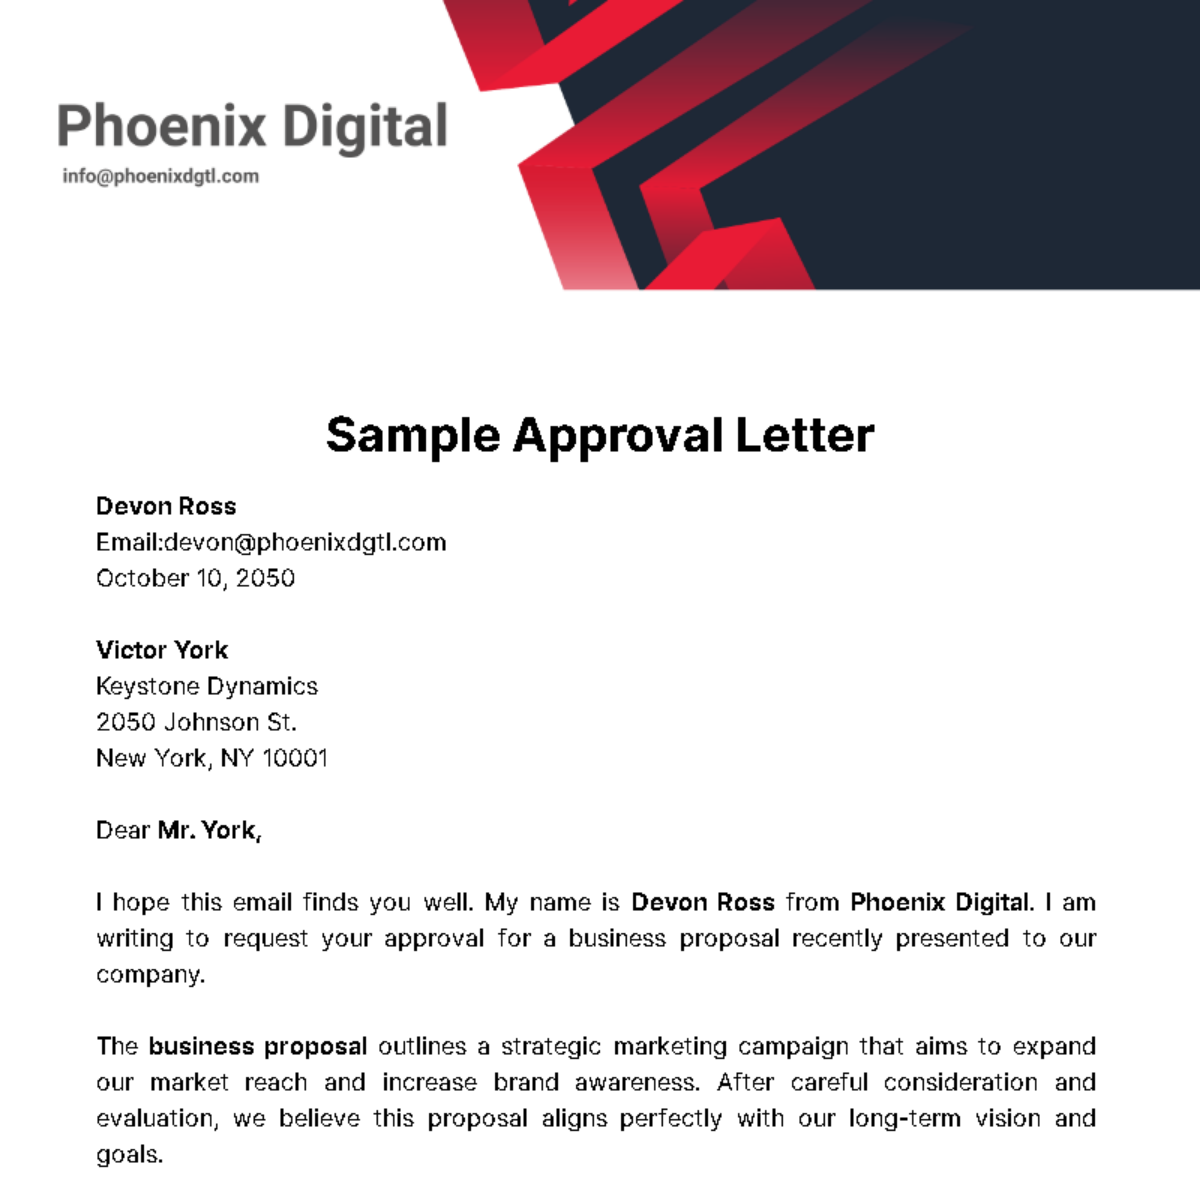 Sample Approval Letter  Template